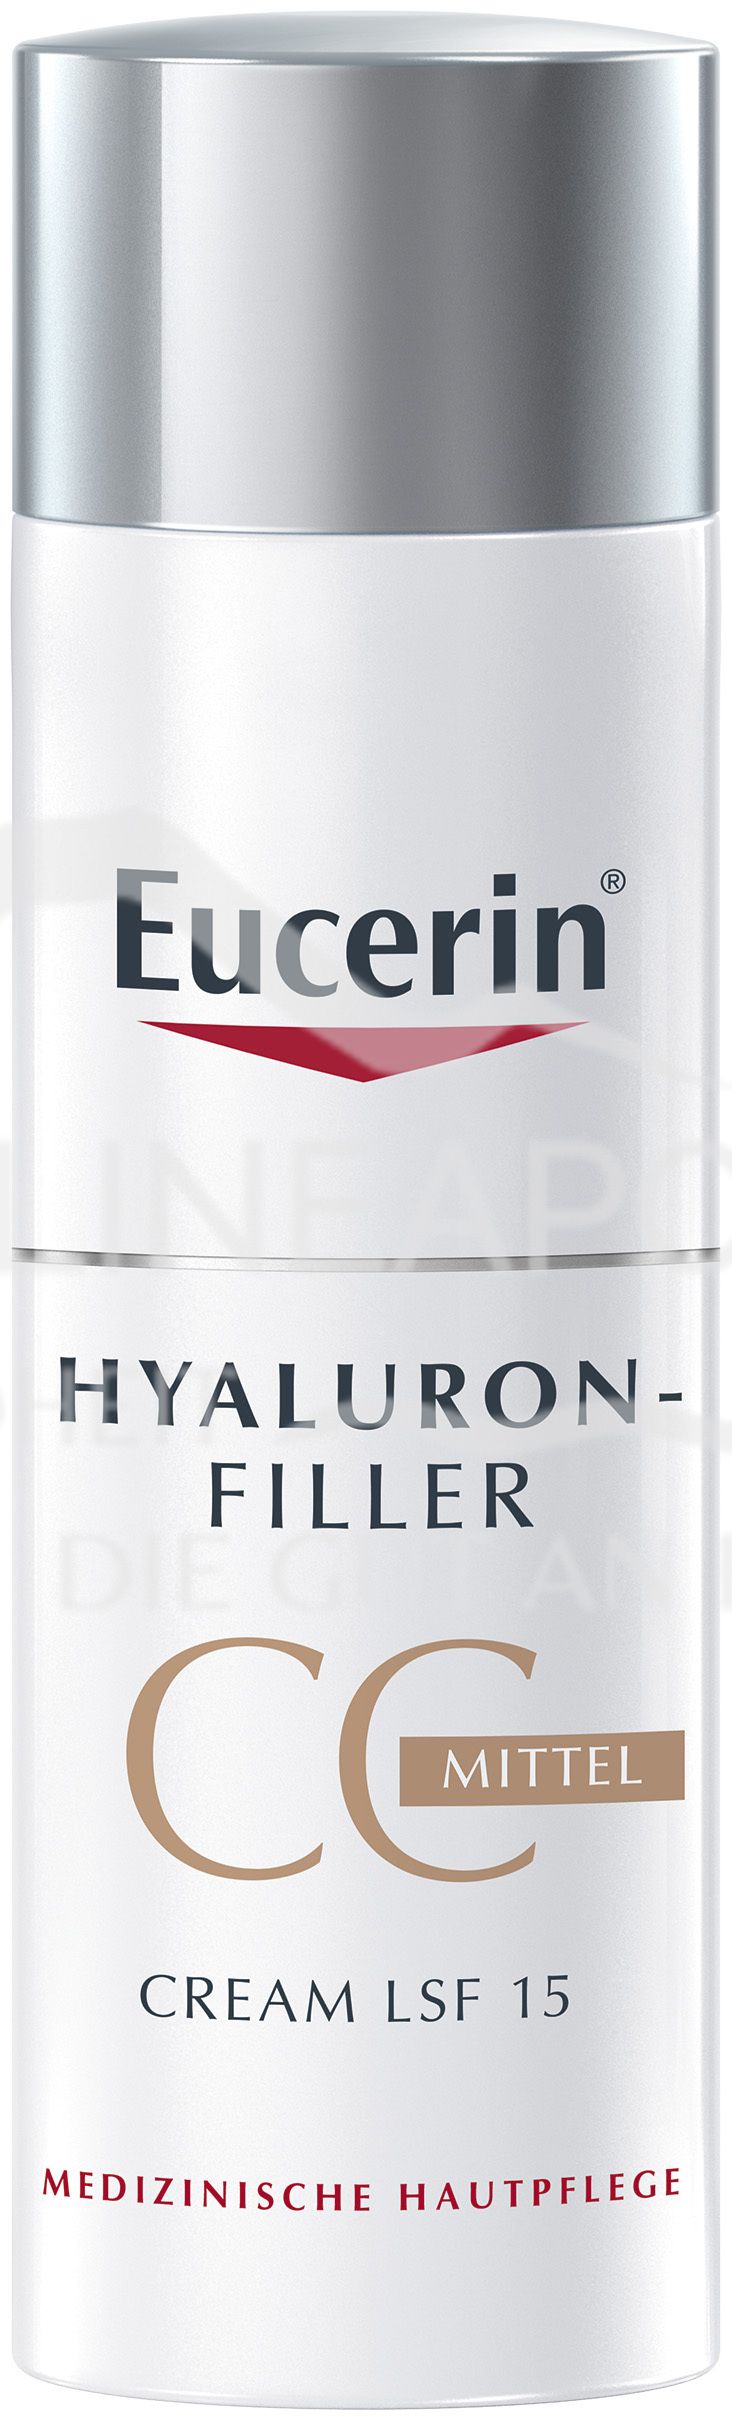 Eucerin® HYALURON-FILLER CC Cream Mittel